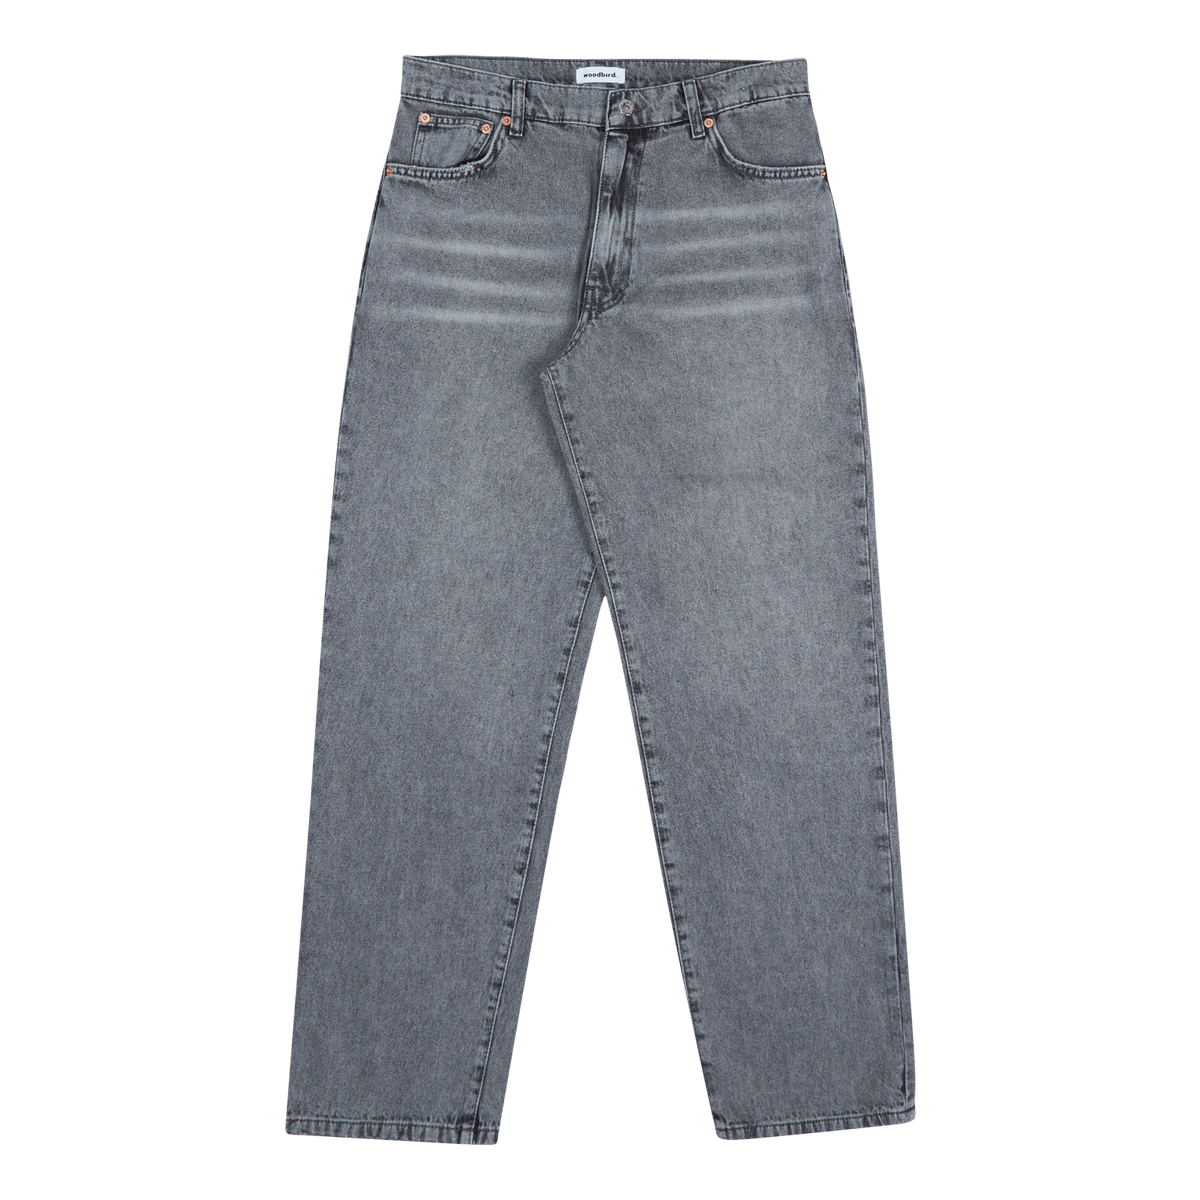 Leroy Ash Grey Jeans 200